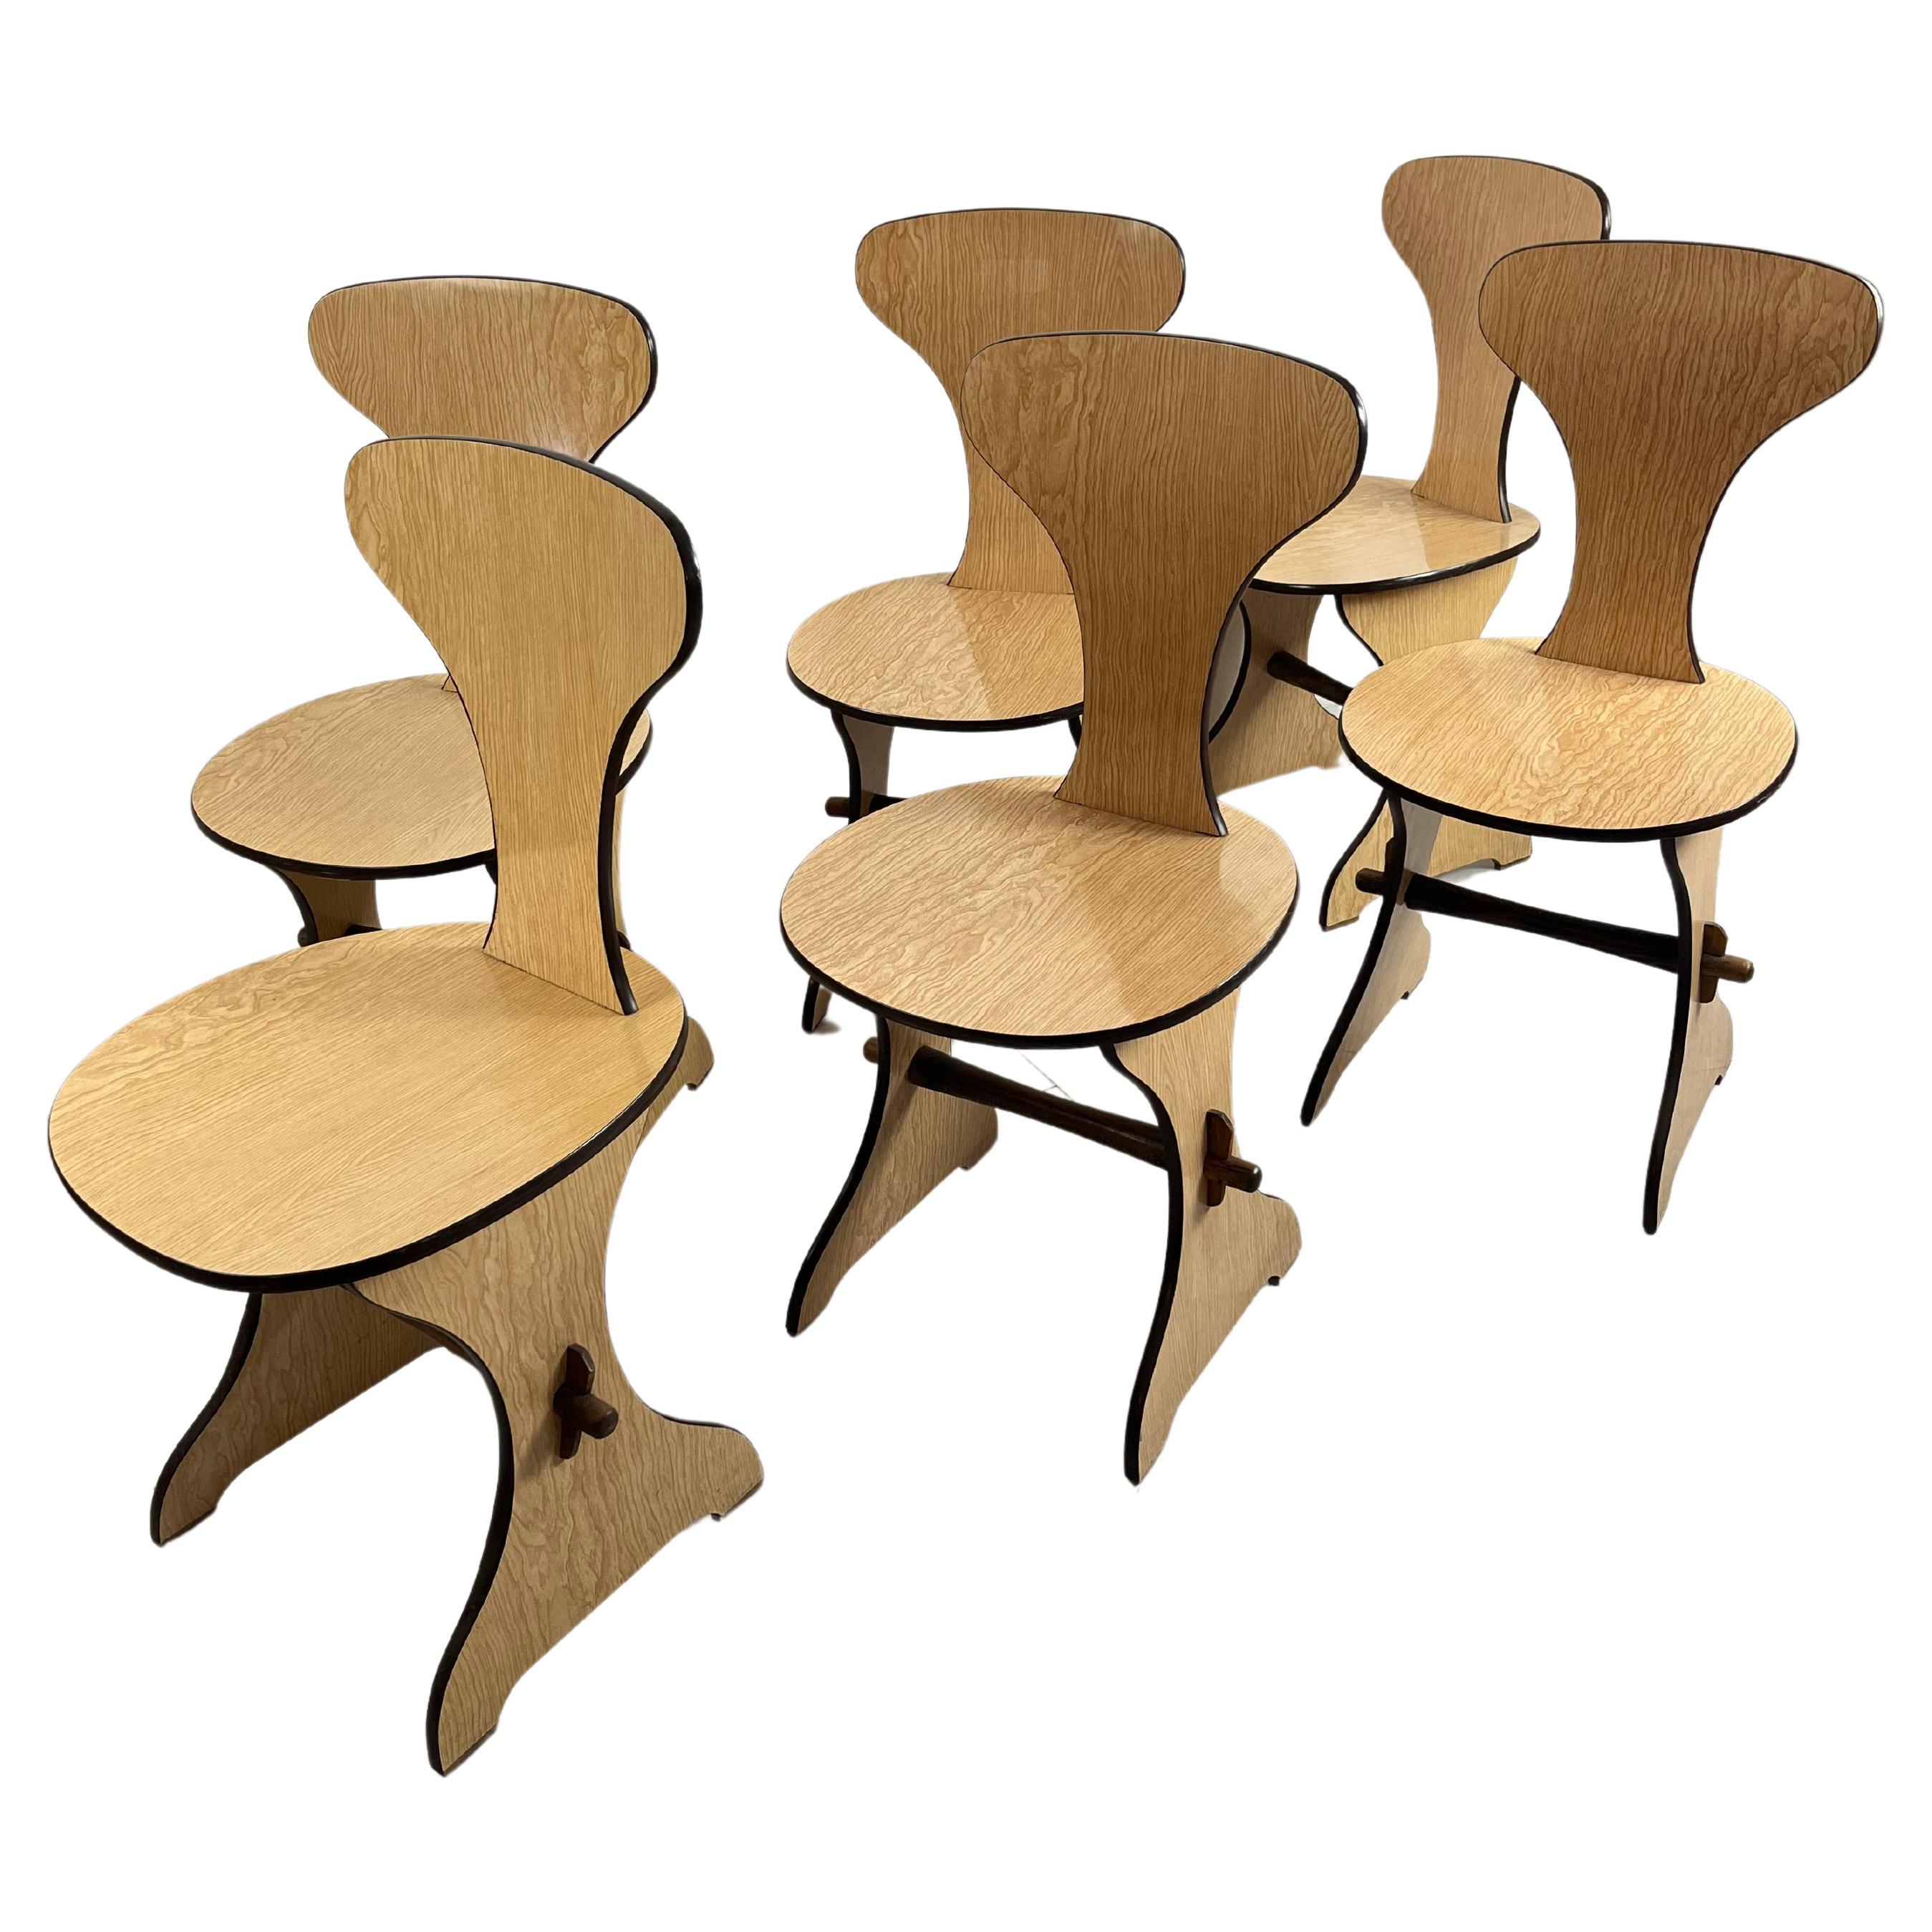 Set of 6 Pedini Fano Mid-Century Chairs Italian design 1960s